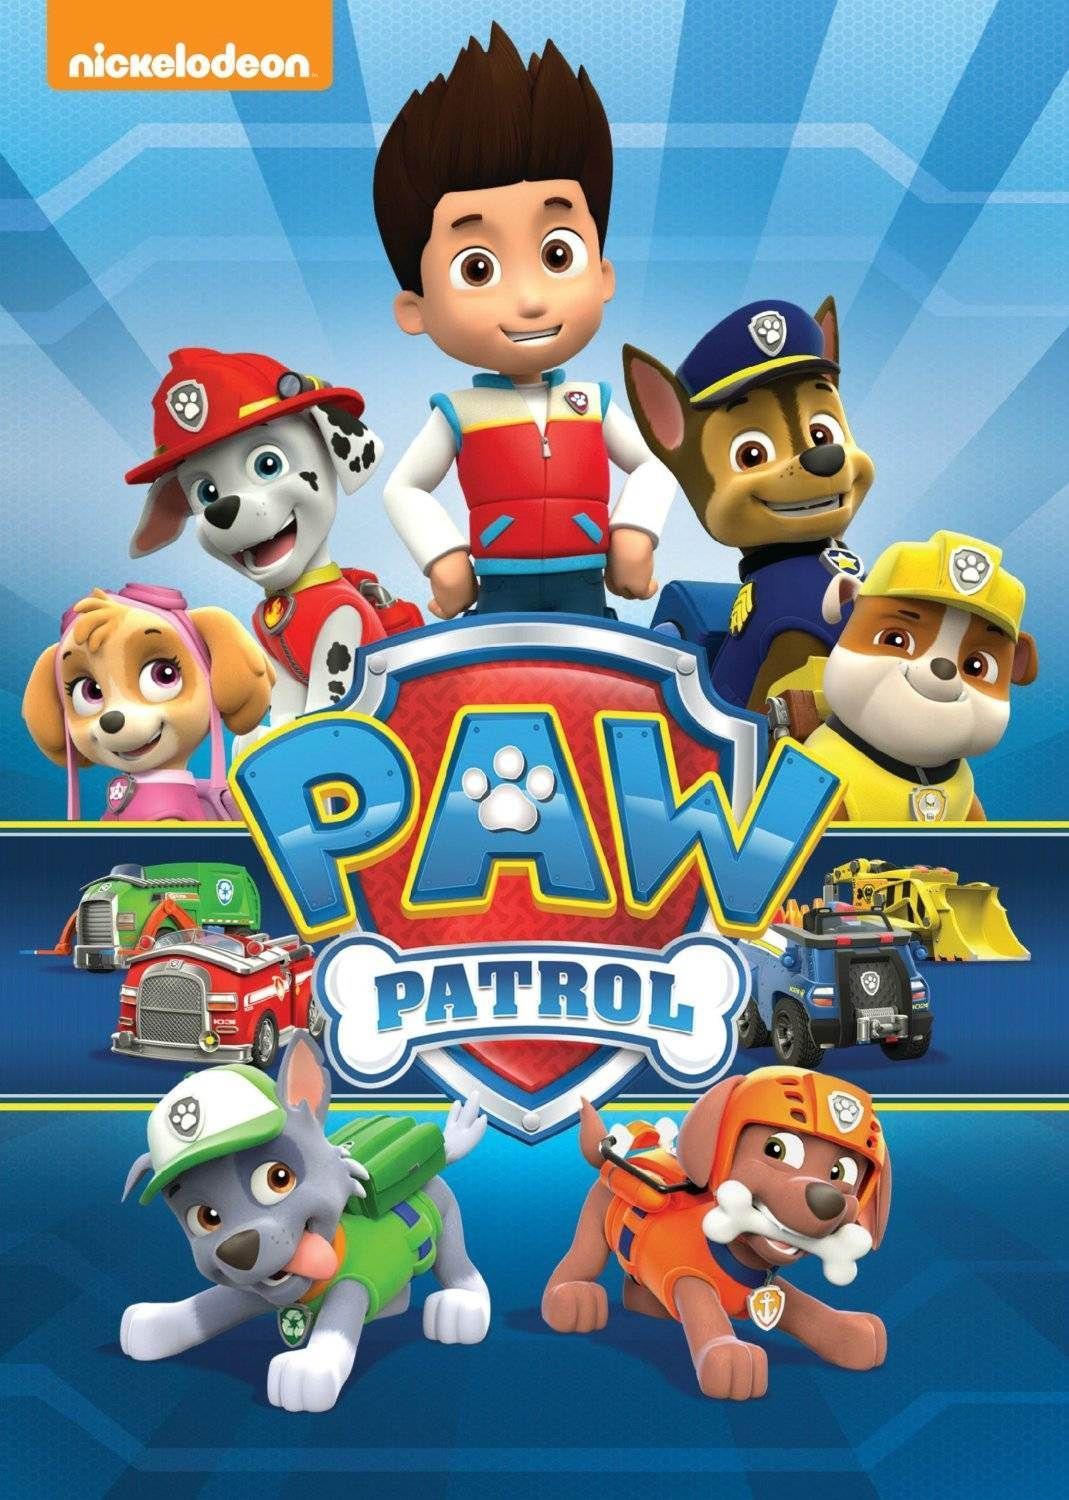 Paw Patrol wallpaper \u wallpaper free download 1754×1240 Paw Patrol Wallpaper.. Paw patrol birthday invitations, Paw patrol party supplies, Paw patrol birthday